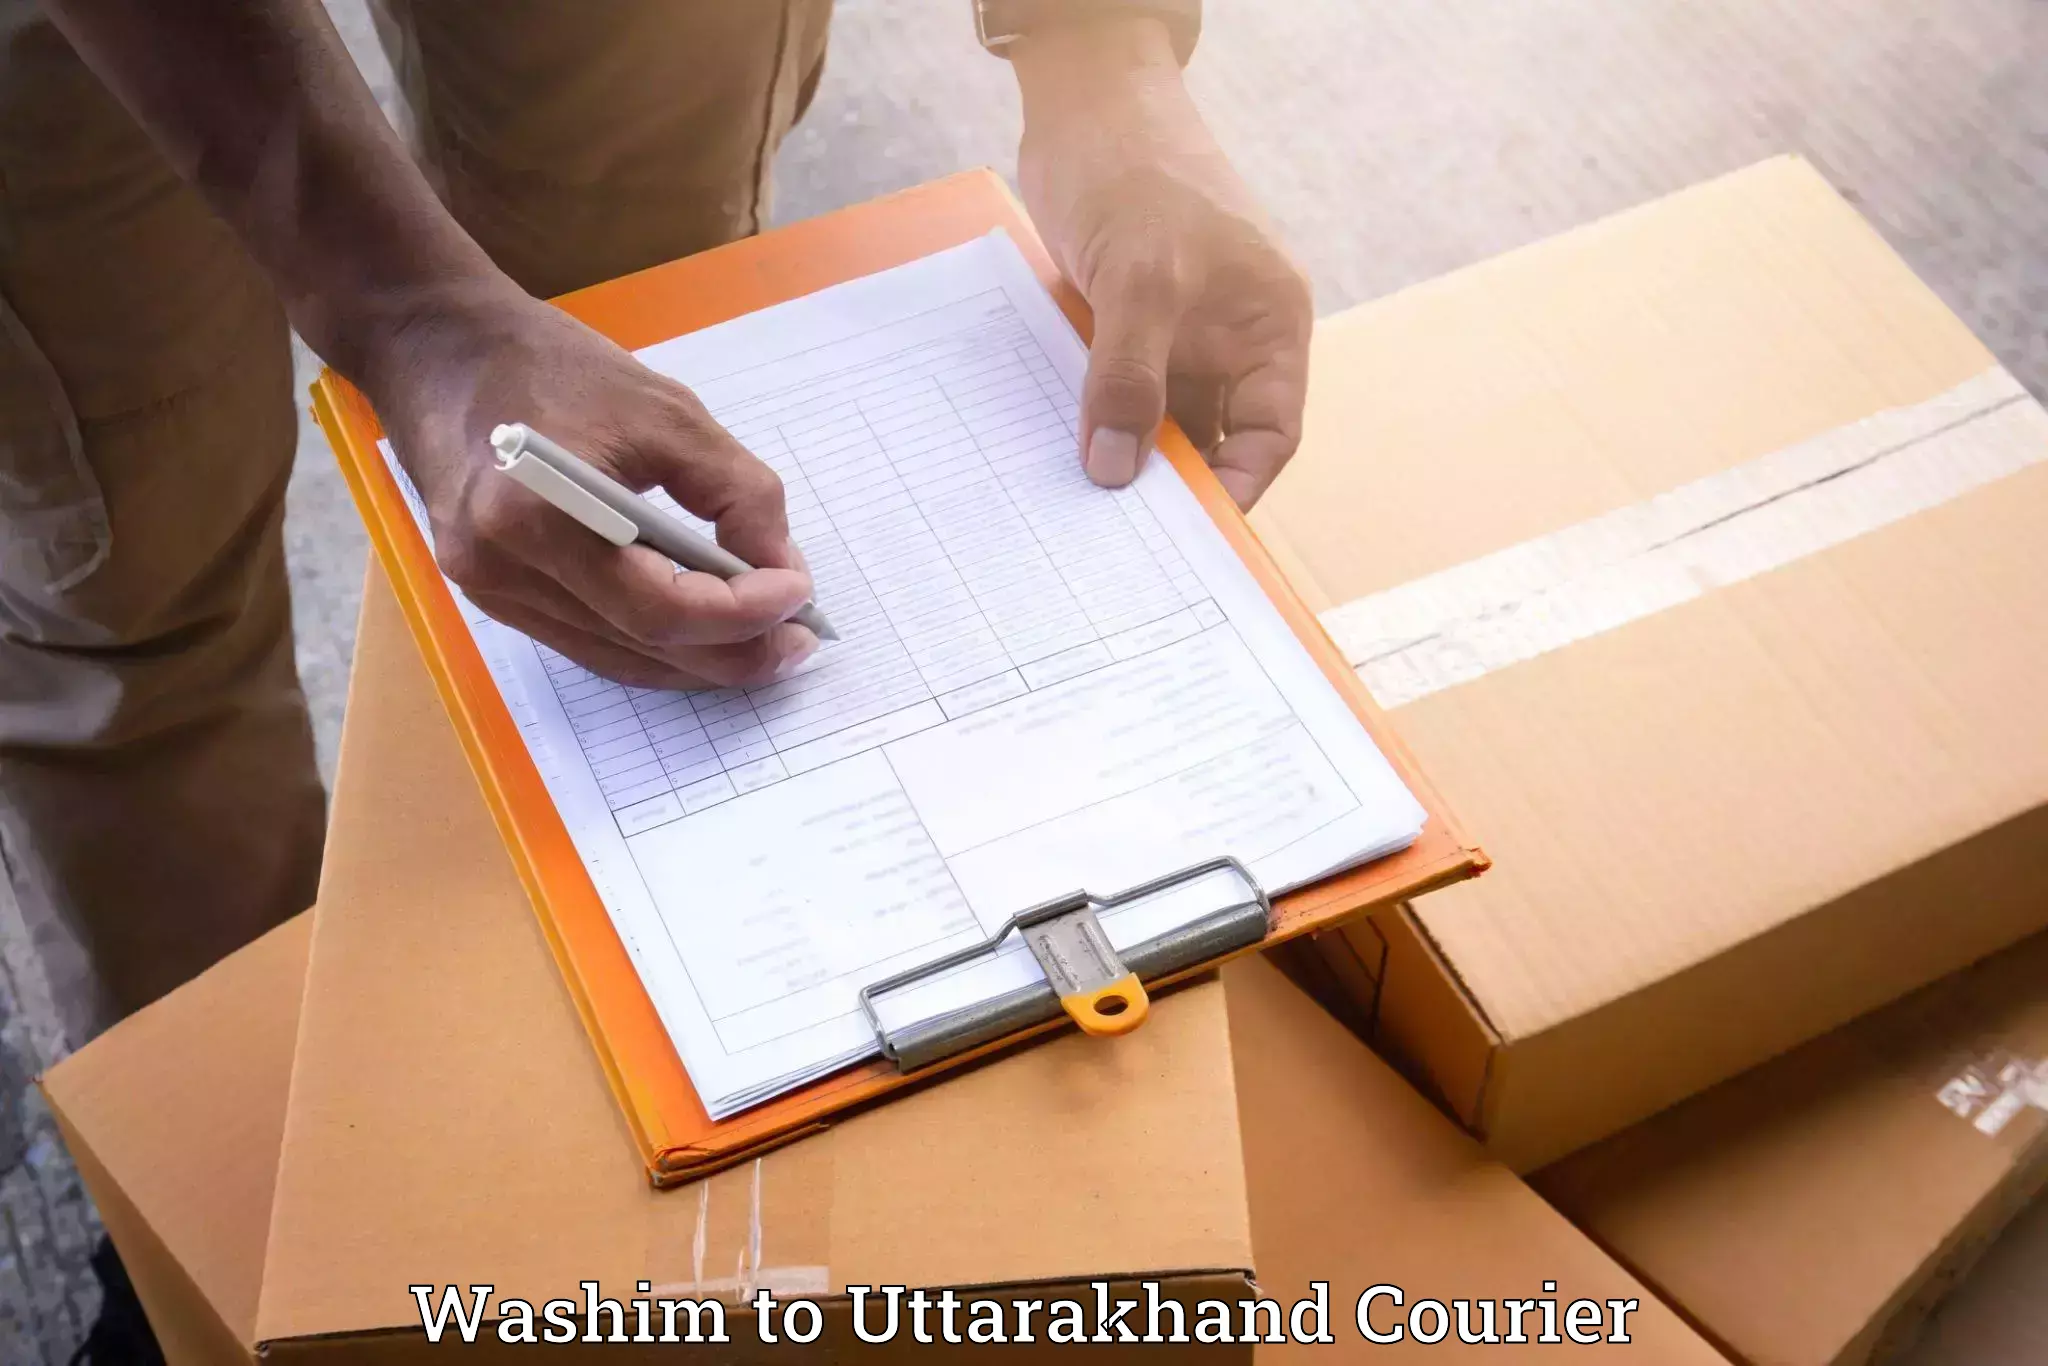 Furniture delivery service Washim to Ranikhet